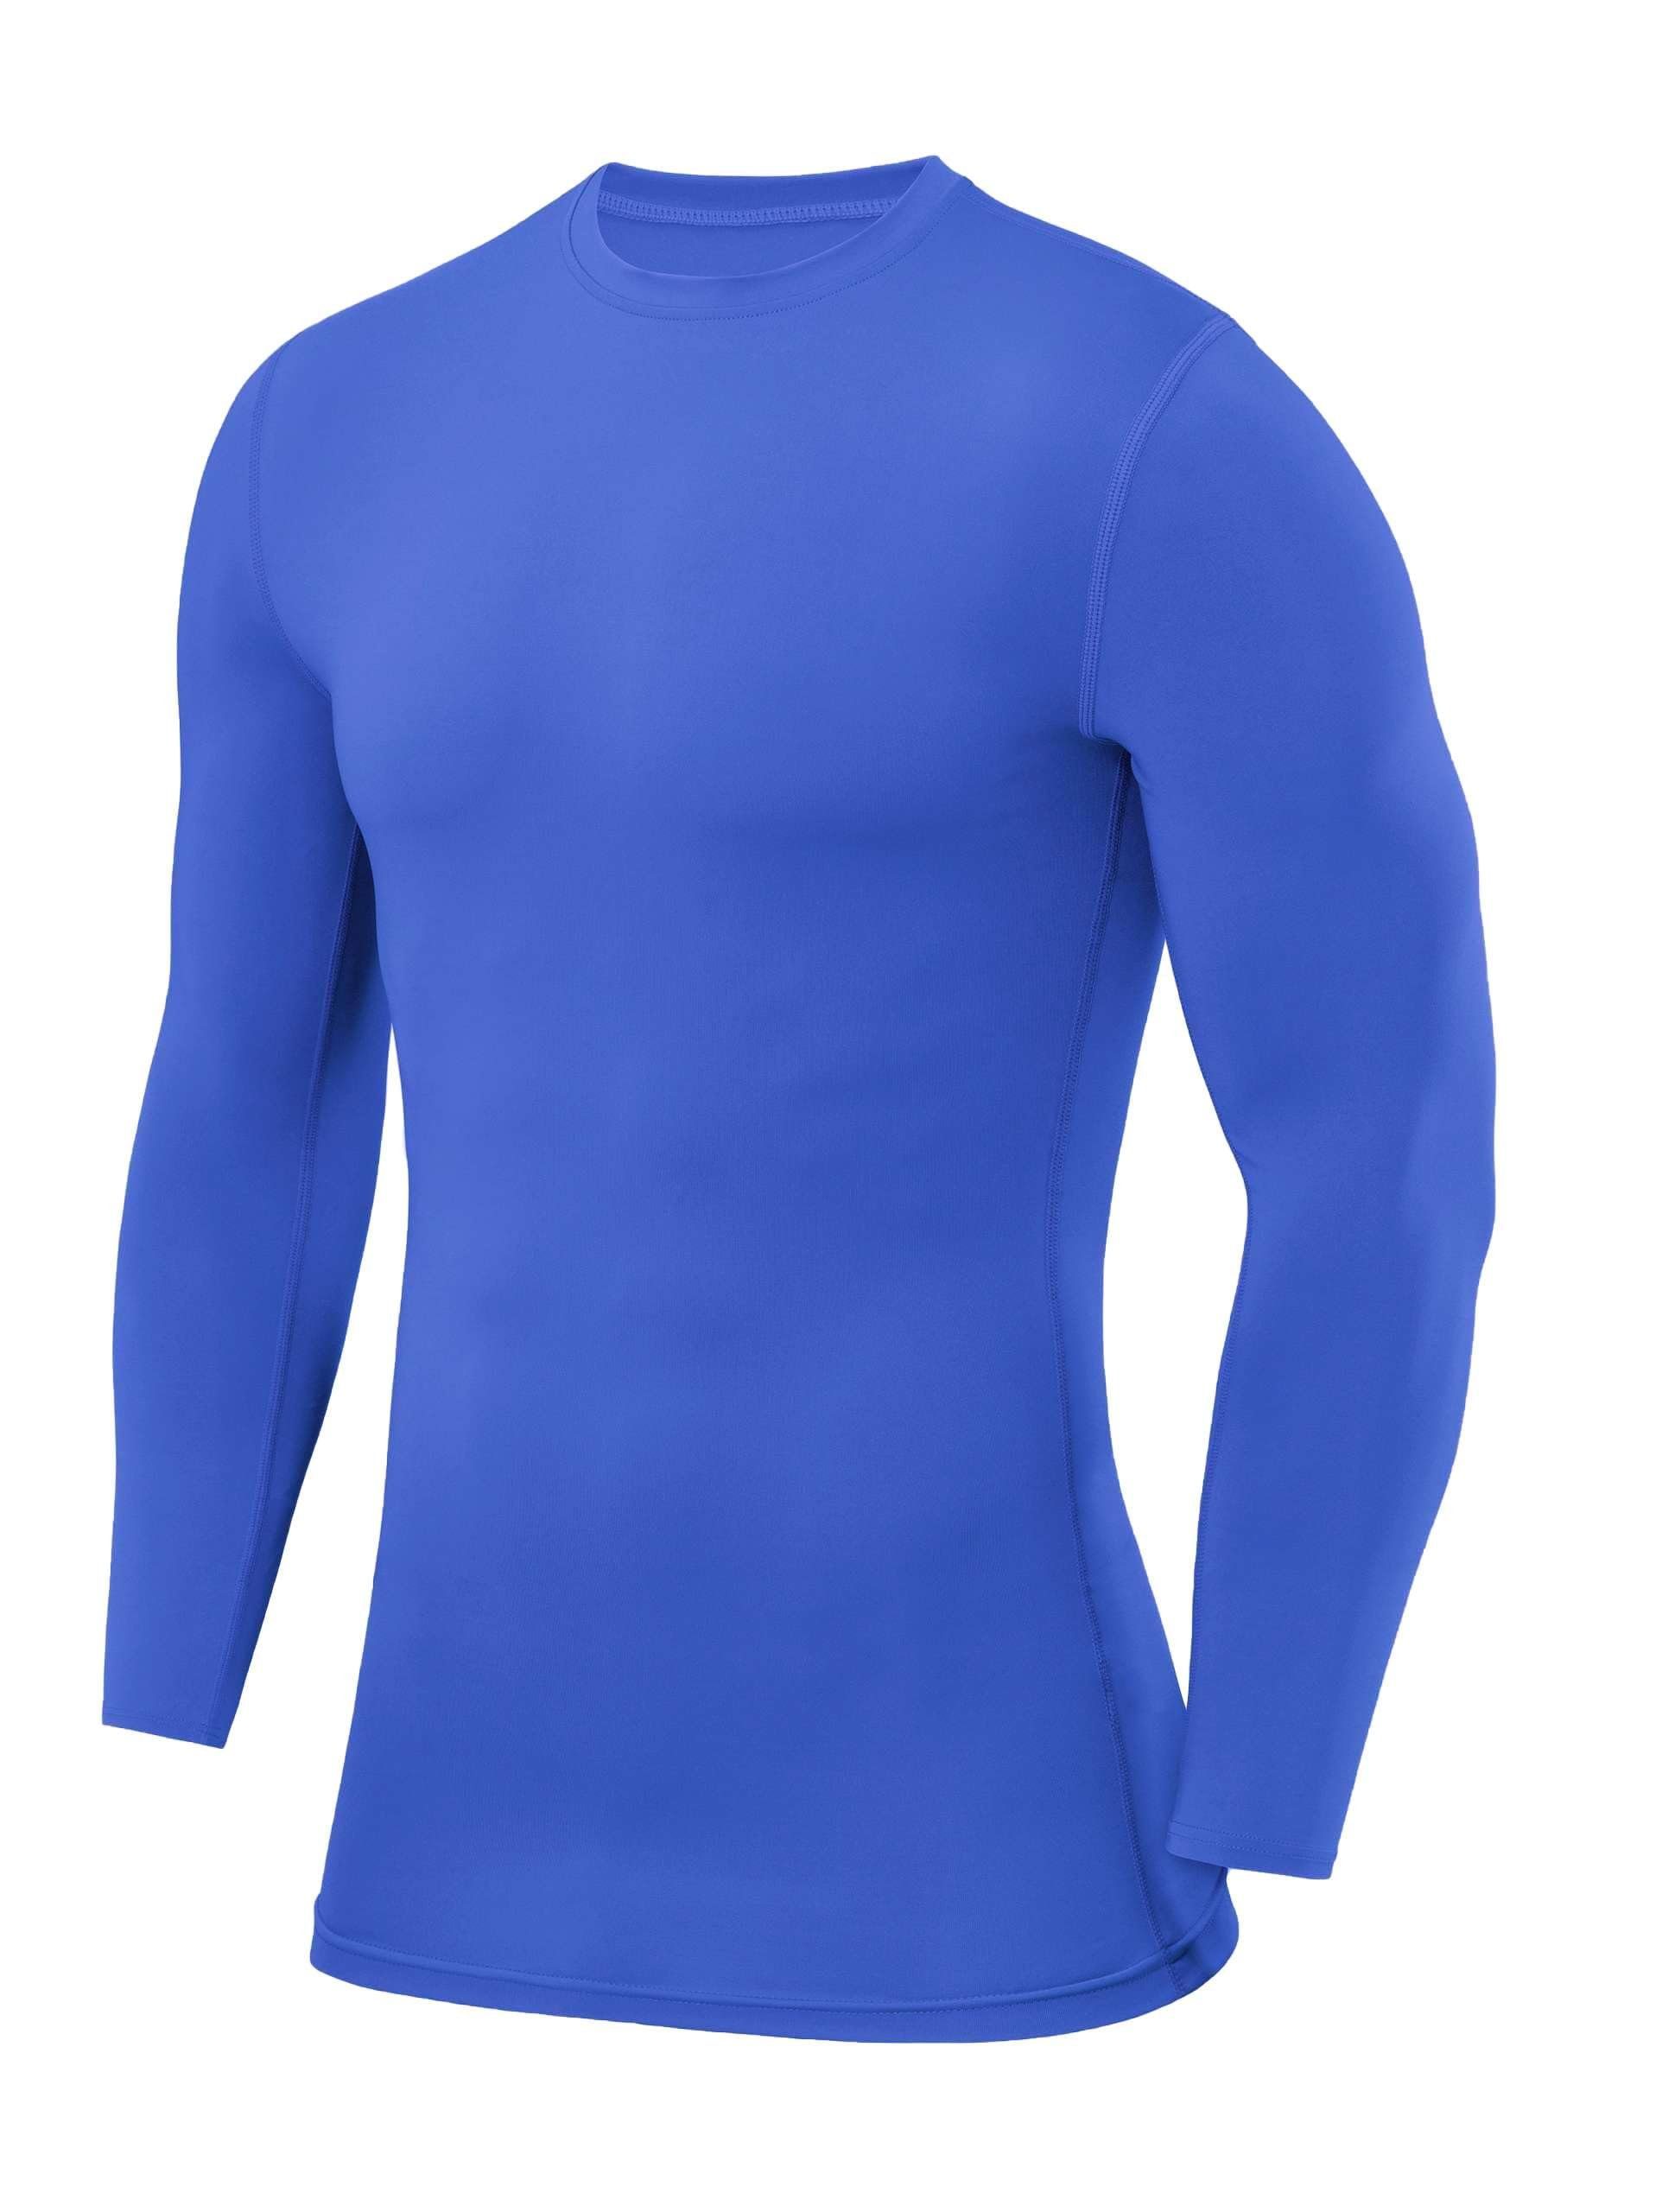 XS PowerLayer Rundhalsausschnitt Langarmshirt Shirt Herren Kompressions Blau POWERLAYER